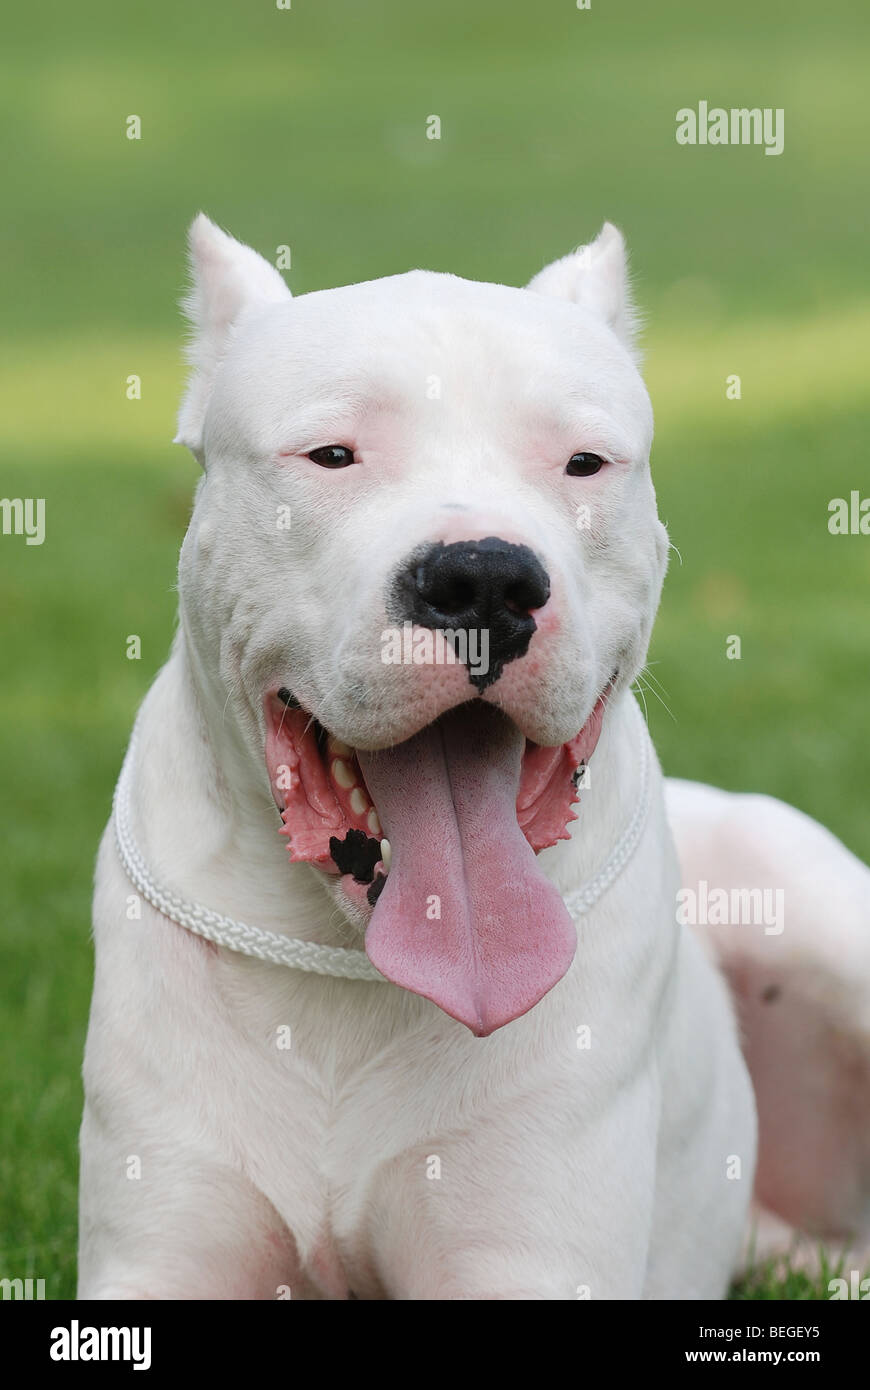 https://c8.alamy.com/comp/BEGEY5/argentinian-dog-dogo-argentino-portrait-BEGEY5.jpg